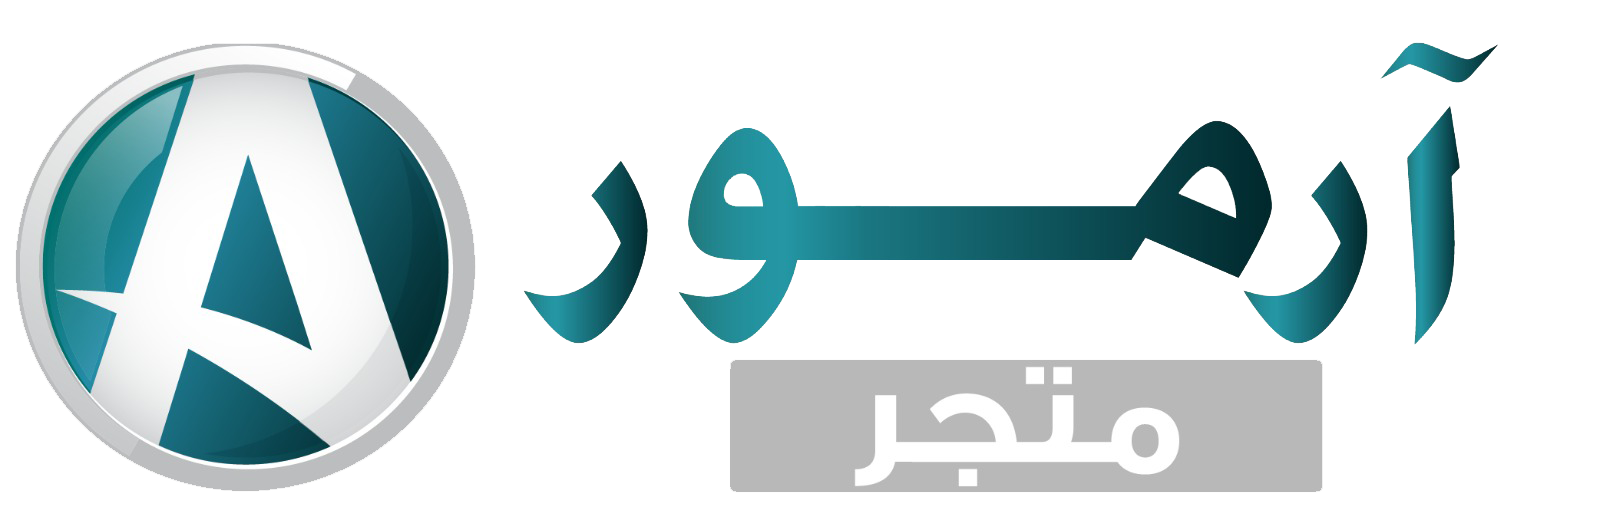 armor logo arabic